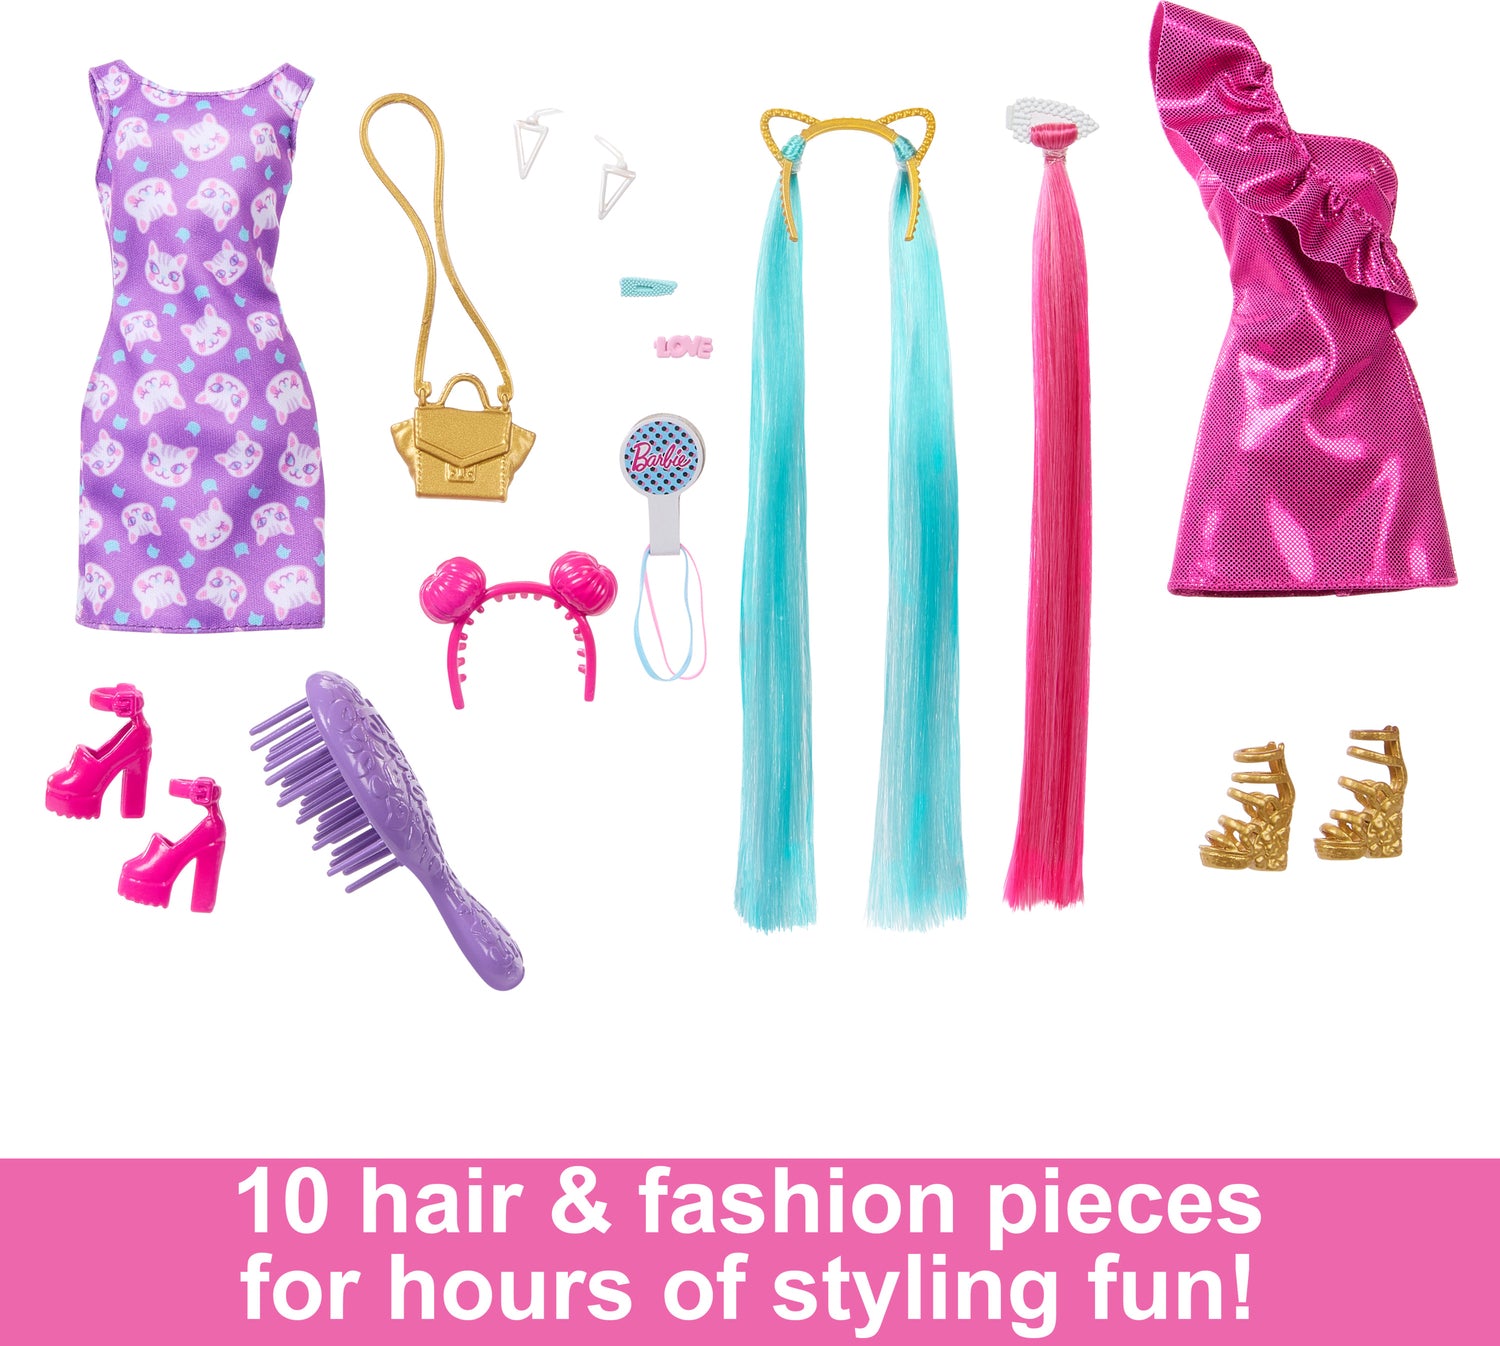 Barbie Fun & Fancy Hair doll and Accessories